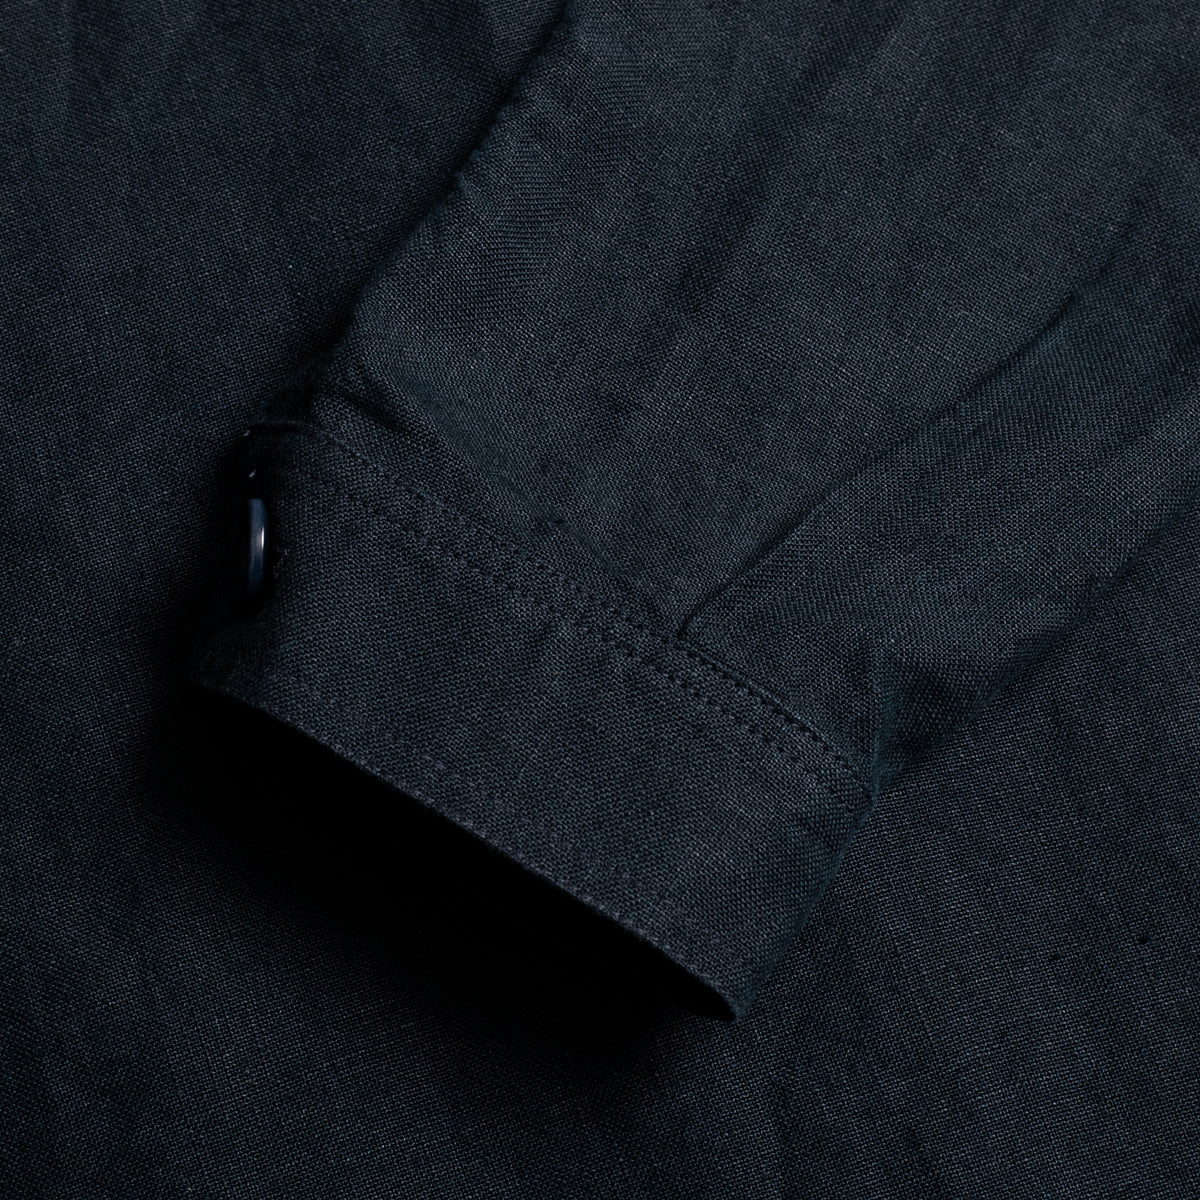 Navy 4 Pocket Linen Chore Jacket